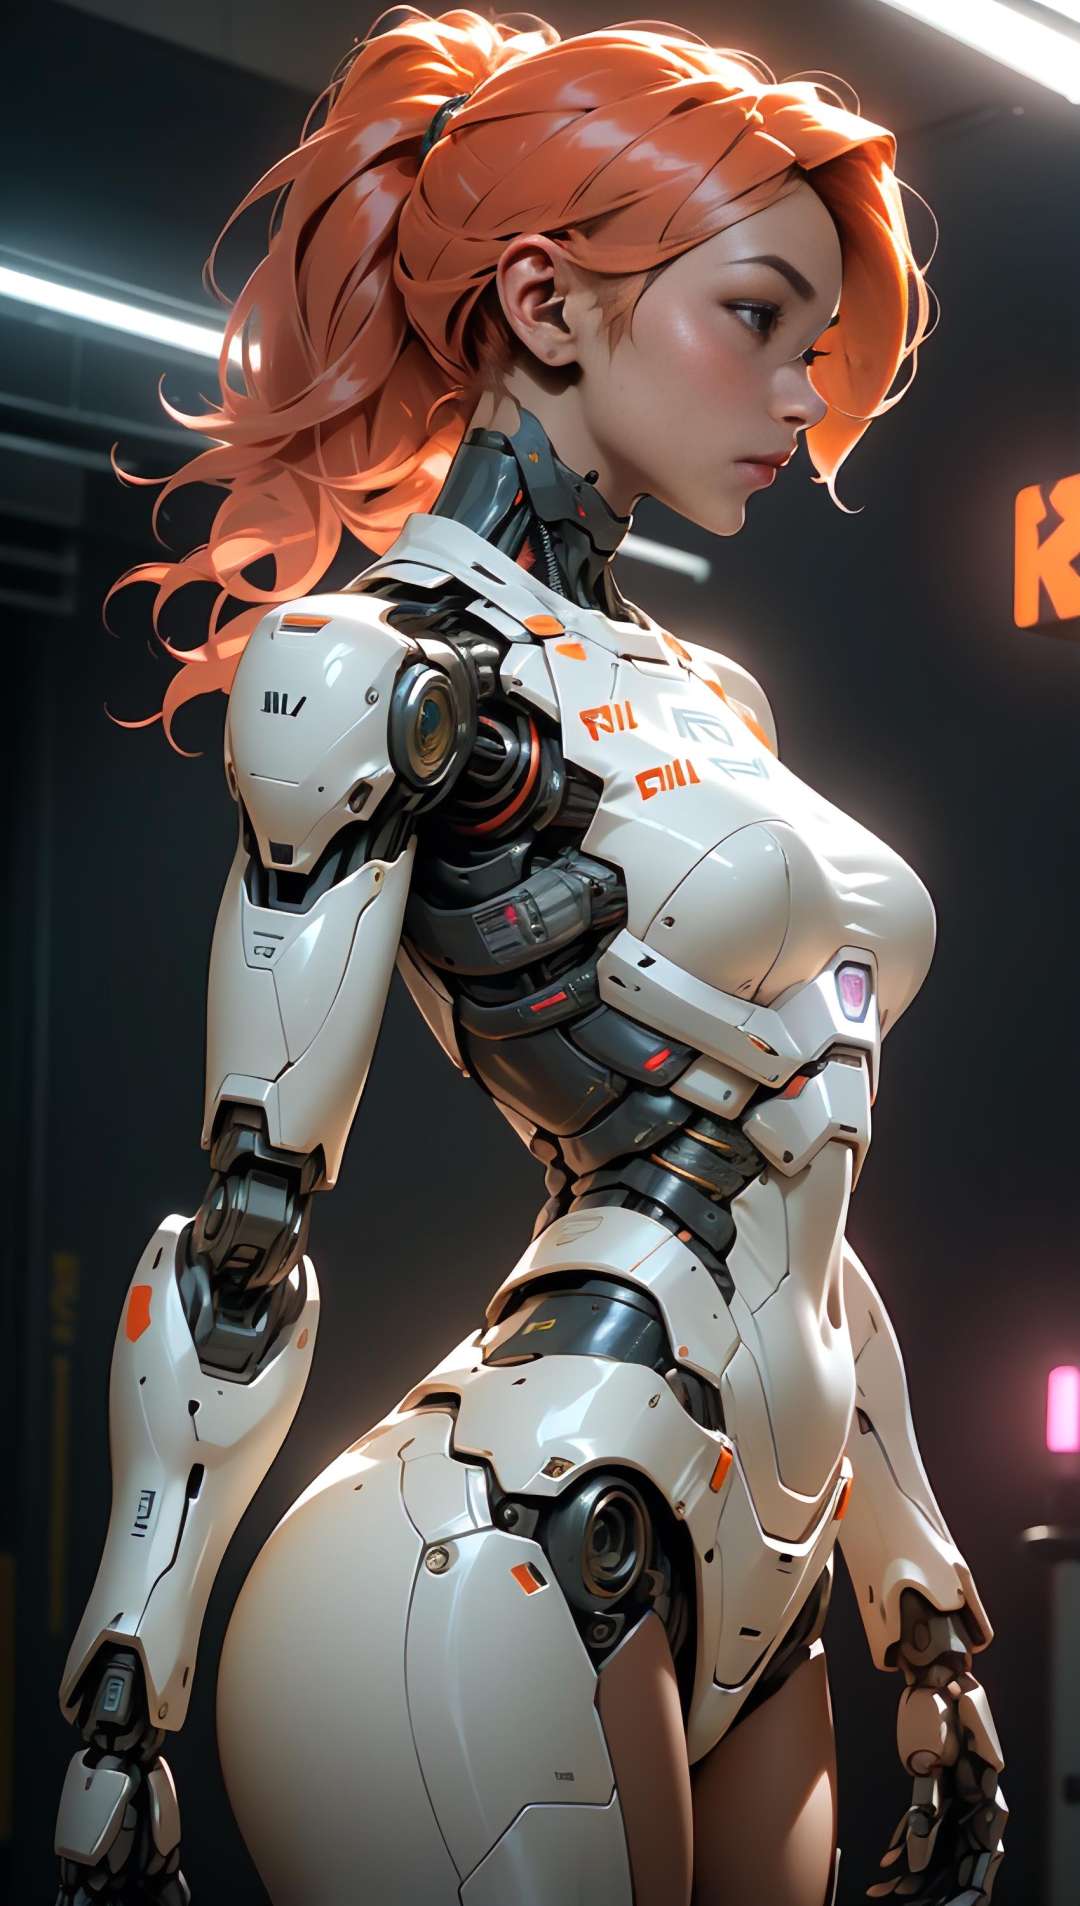 female,robot ,female,robot cyborg mech, peach hair, cyberpunk:0.35, <lora:nijiarmor_v2:1.0> <lora:EnvyBeautyMix09:1>, perfect lighting, perfect shading, detailed, intricate, (perfect body), beautiful face, flowing hair, ((full torso)), photorealistic:1.35, mature adult:1.4, 